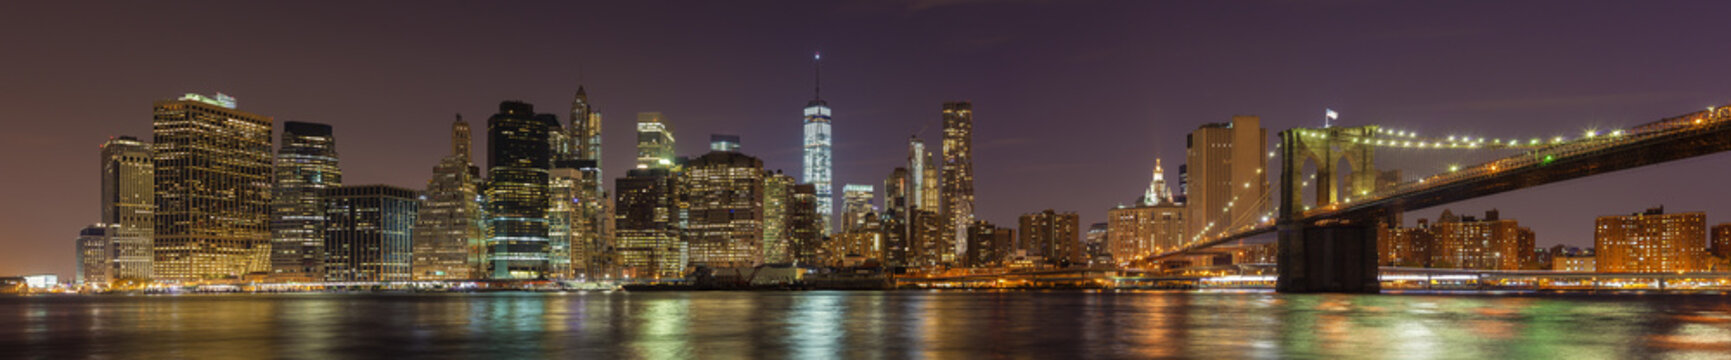 Manhattan waterfront at night, New York City, USA